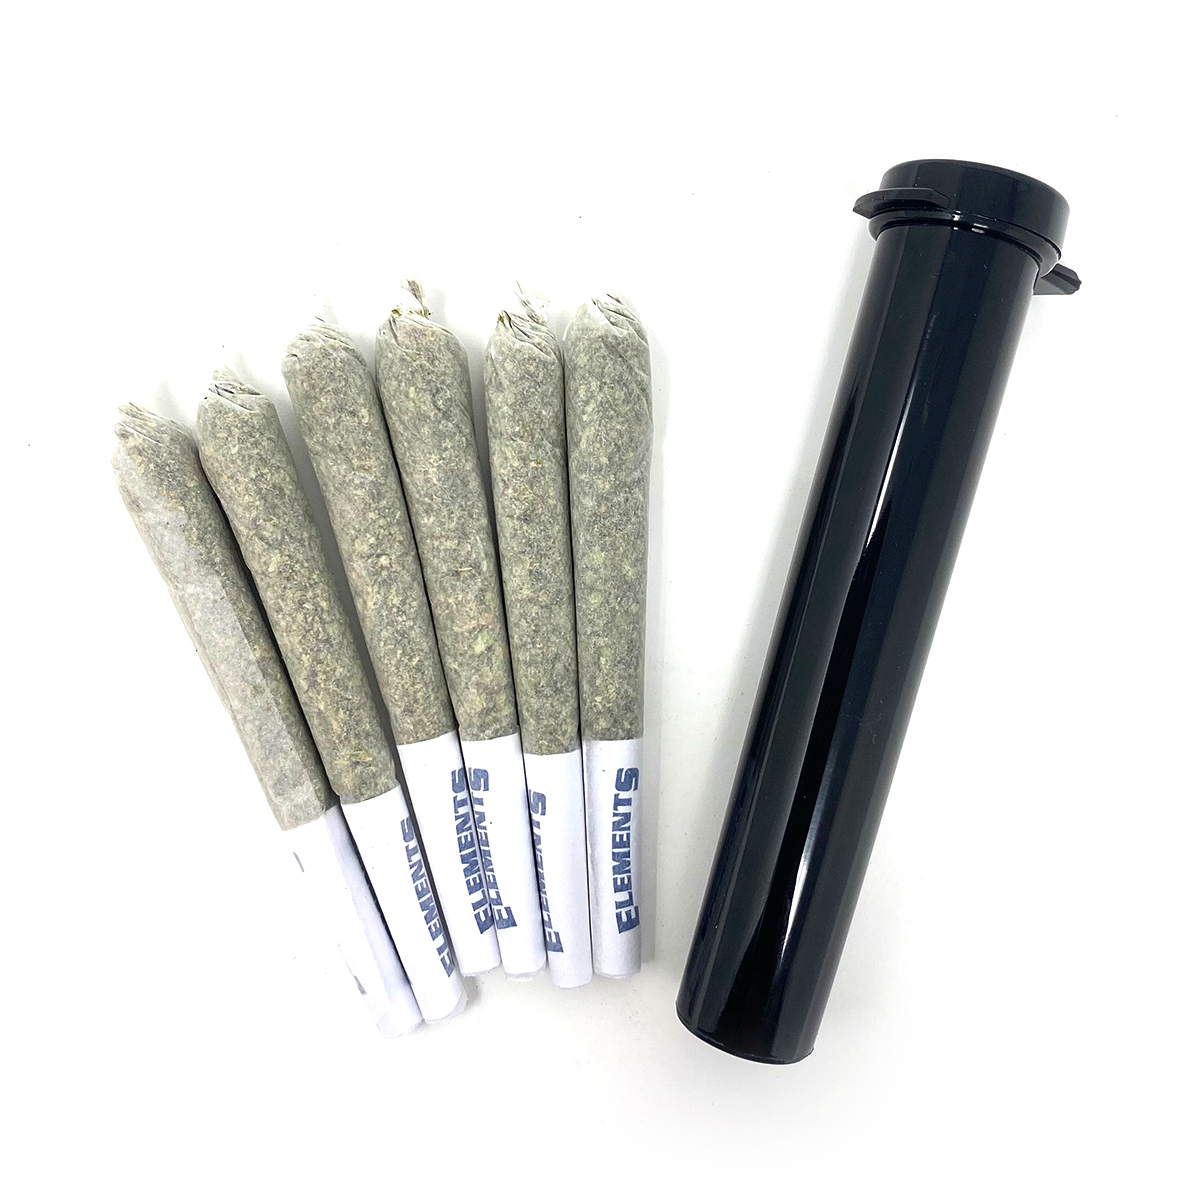 Gorilla Glue Pre-rolls | Buy Pre-rolls Online | Mail Order Marijuana